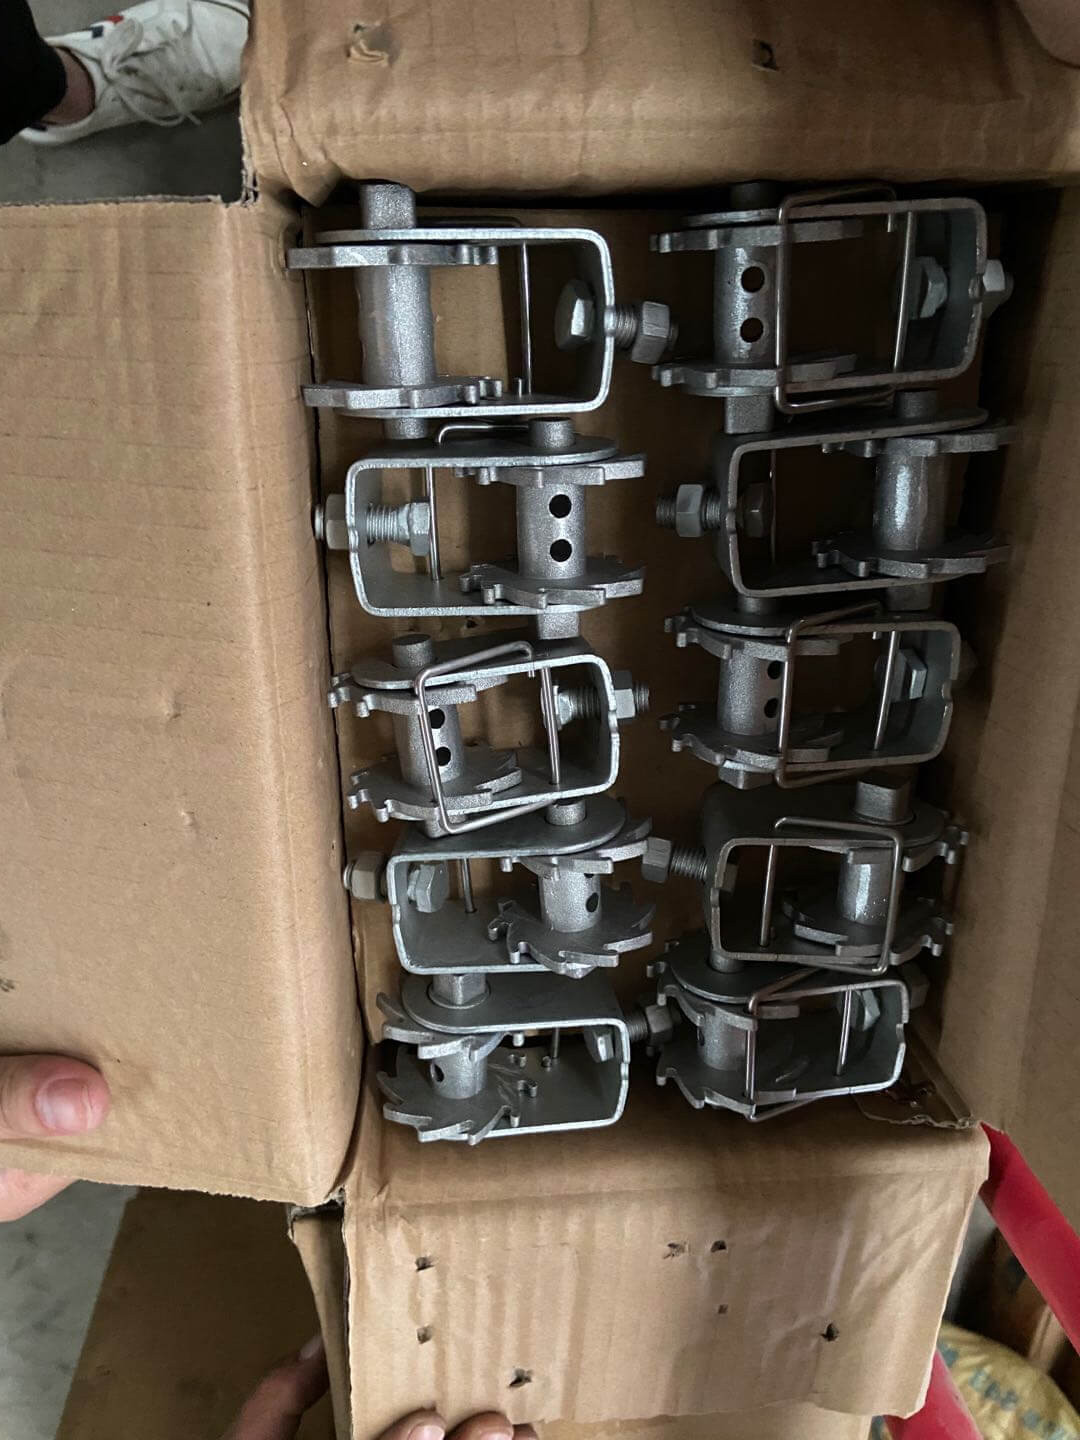 Aluminium Wire strainers awaiting despatch, June 2020